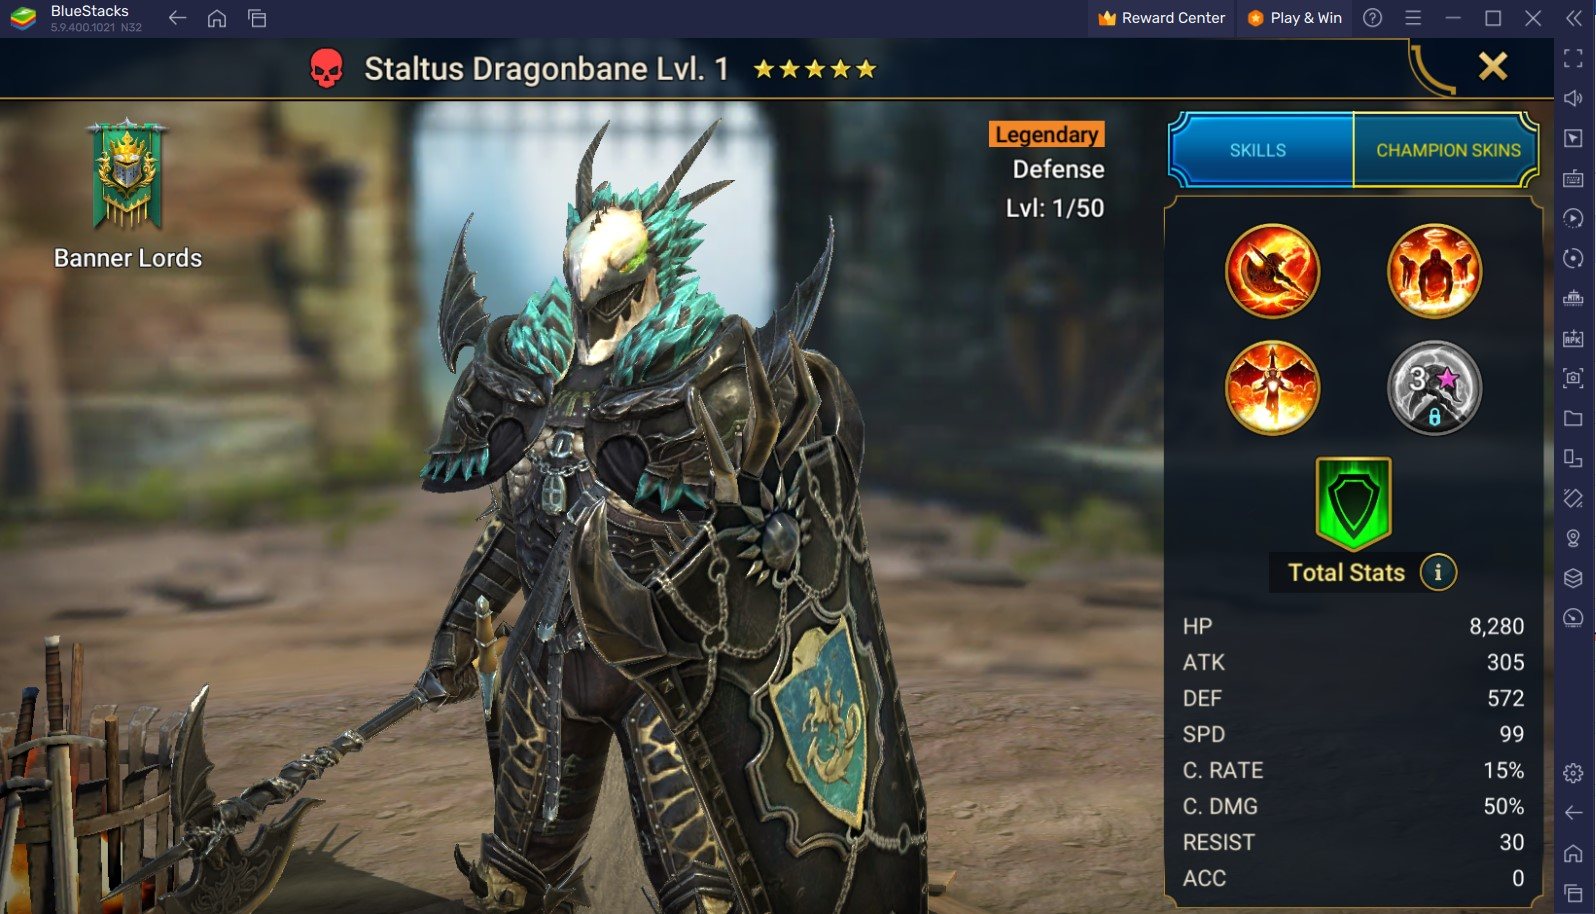 RAID: Shadow Legends – Guaranteed Staltus Dragonbane Summoning Event and 10X Summoning Event